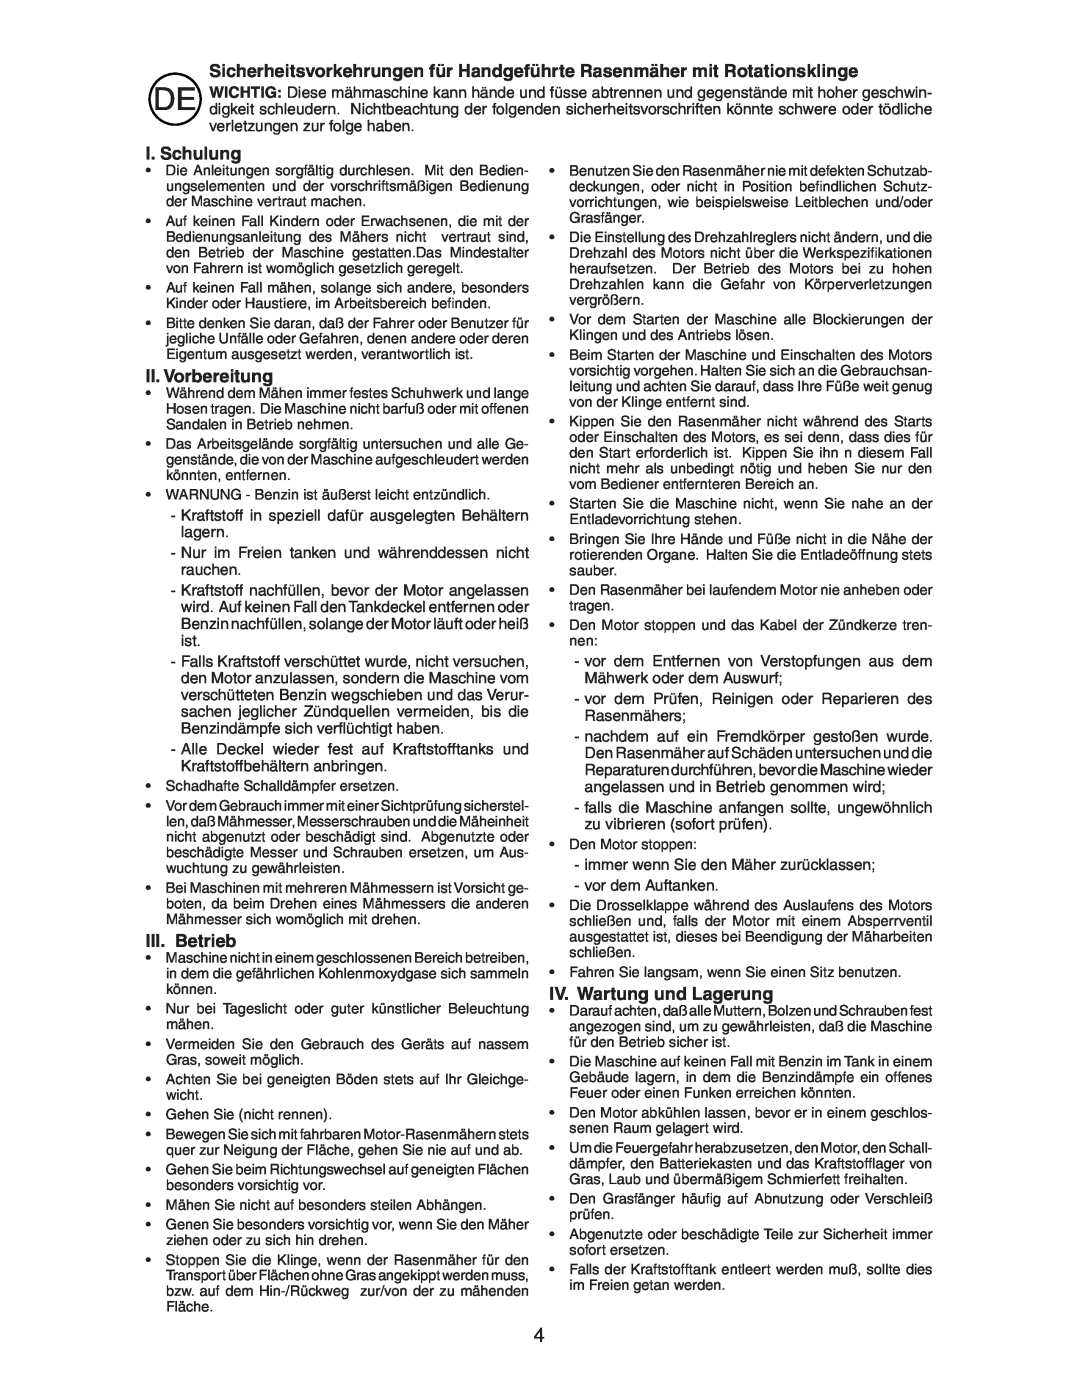 McCulloch M6553D instruction manual I. Schulung, II. Vorbereitung, III. Betrieb, IV. Wartung und Lagerung 